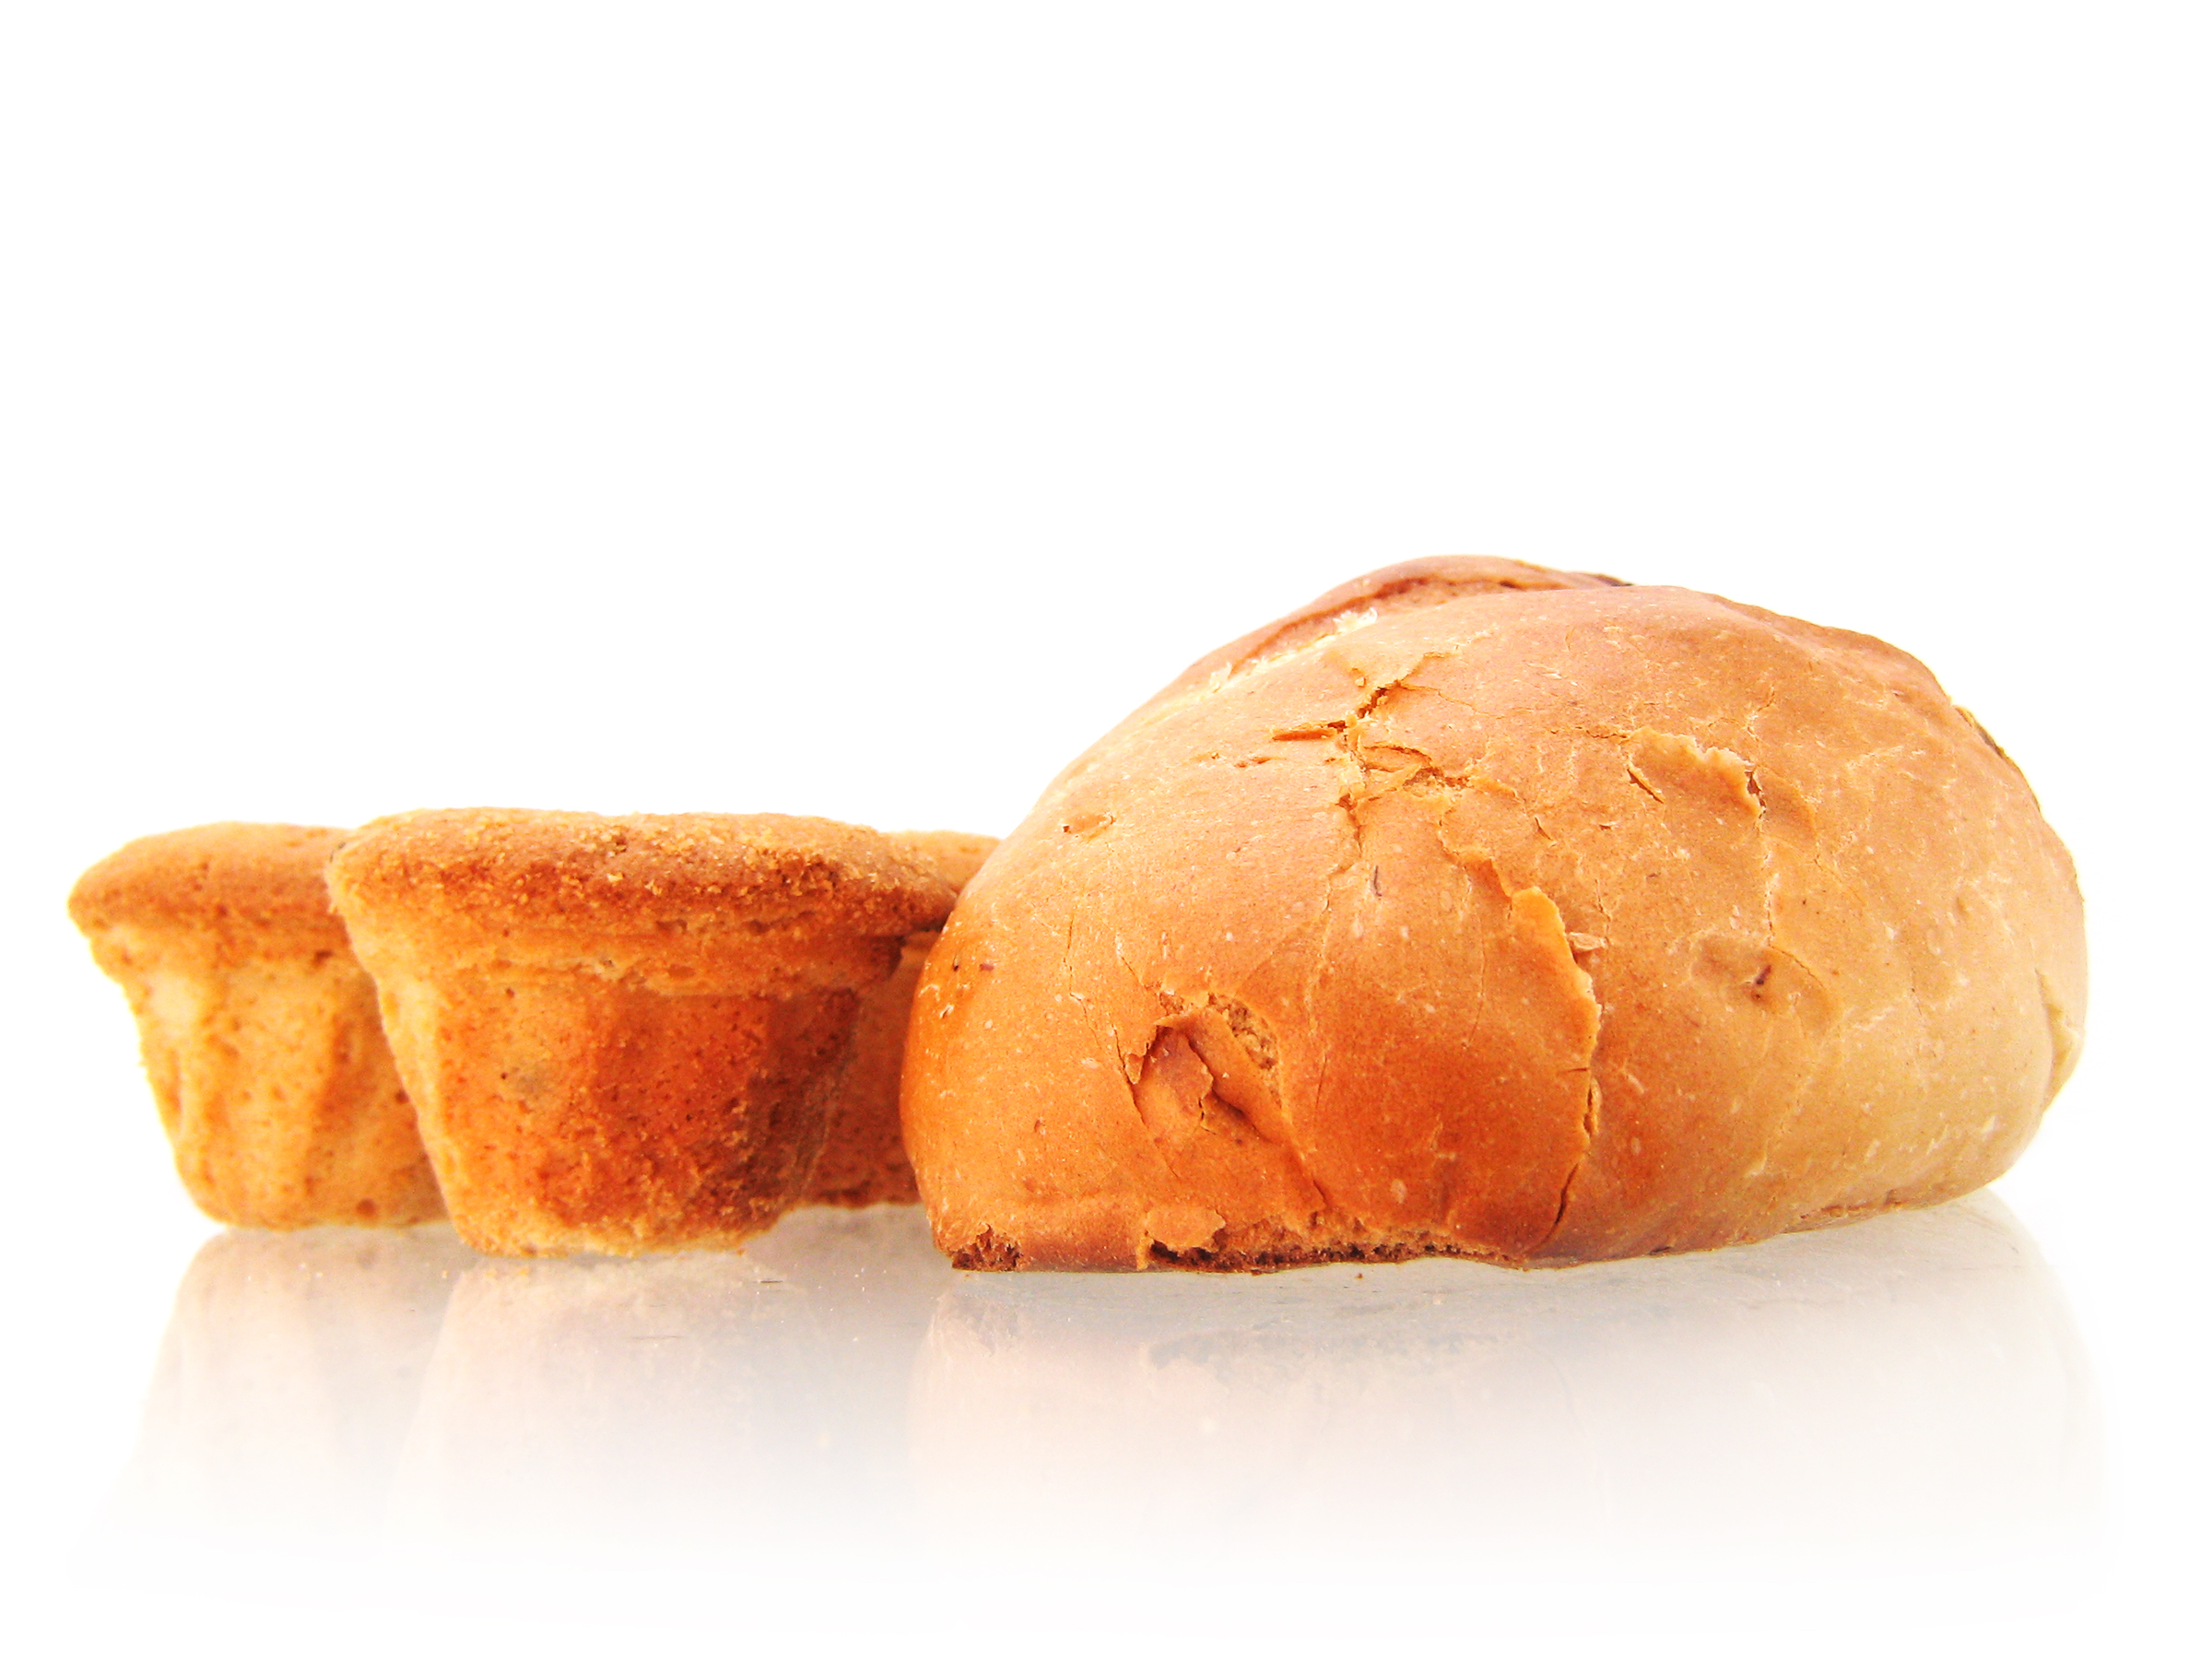 bread and buns, Bakery, Bread, Breakfast, Bun, HQ Photo